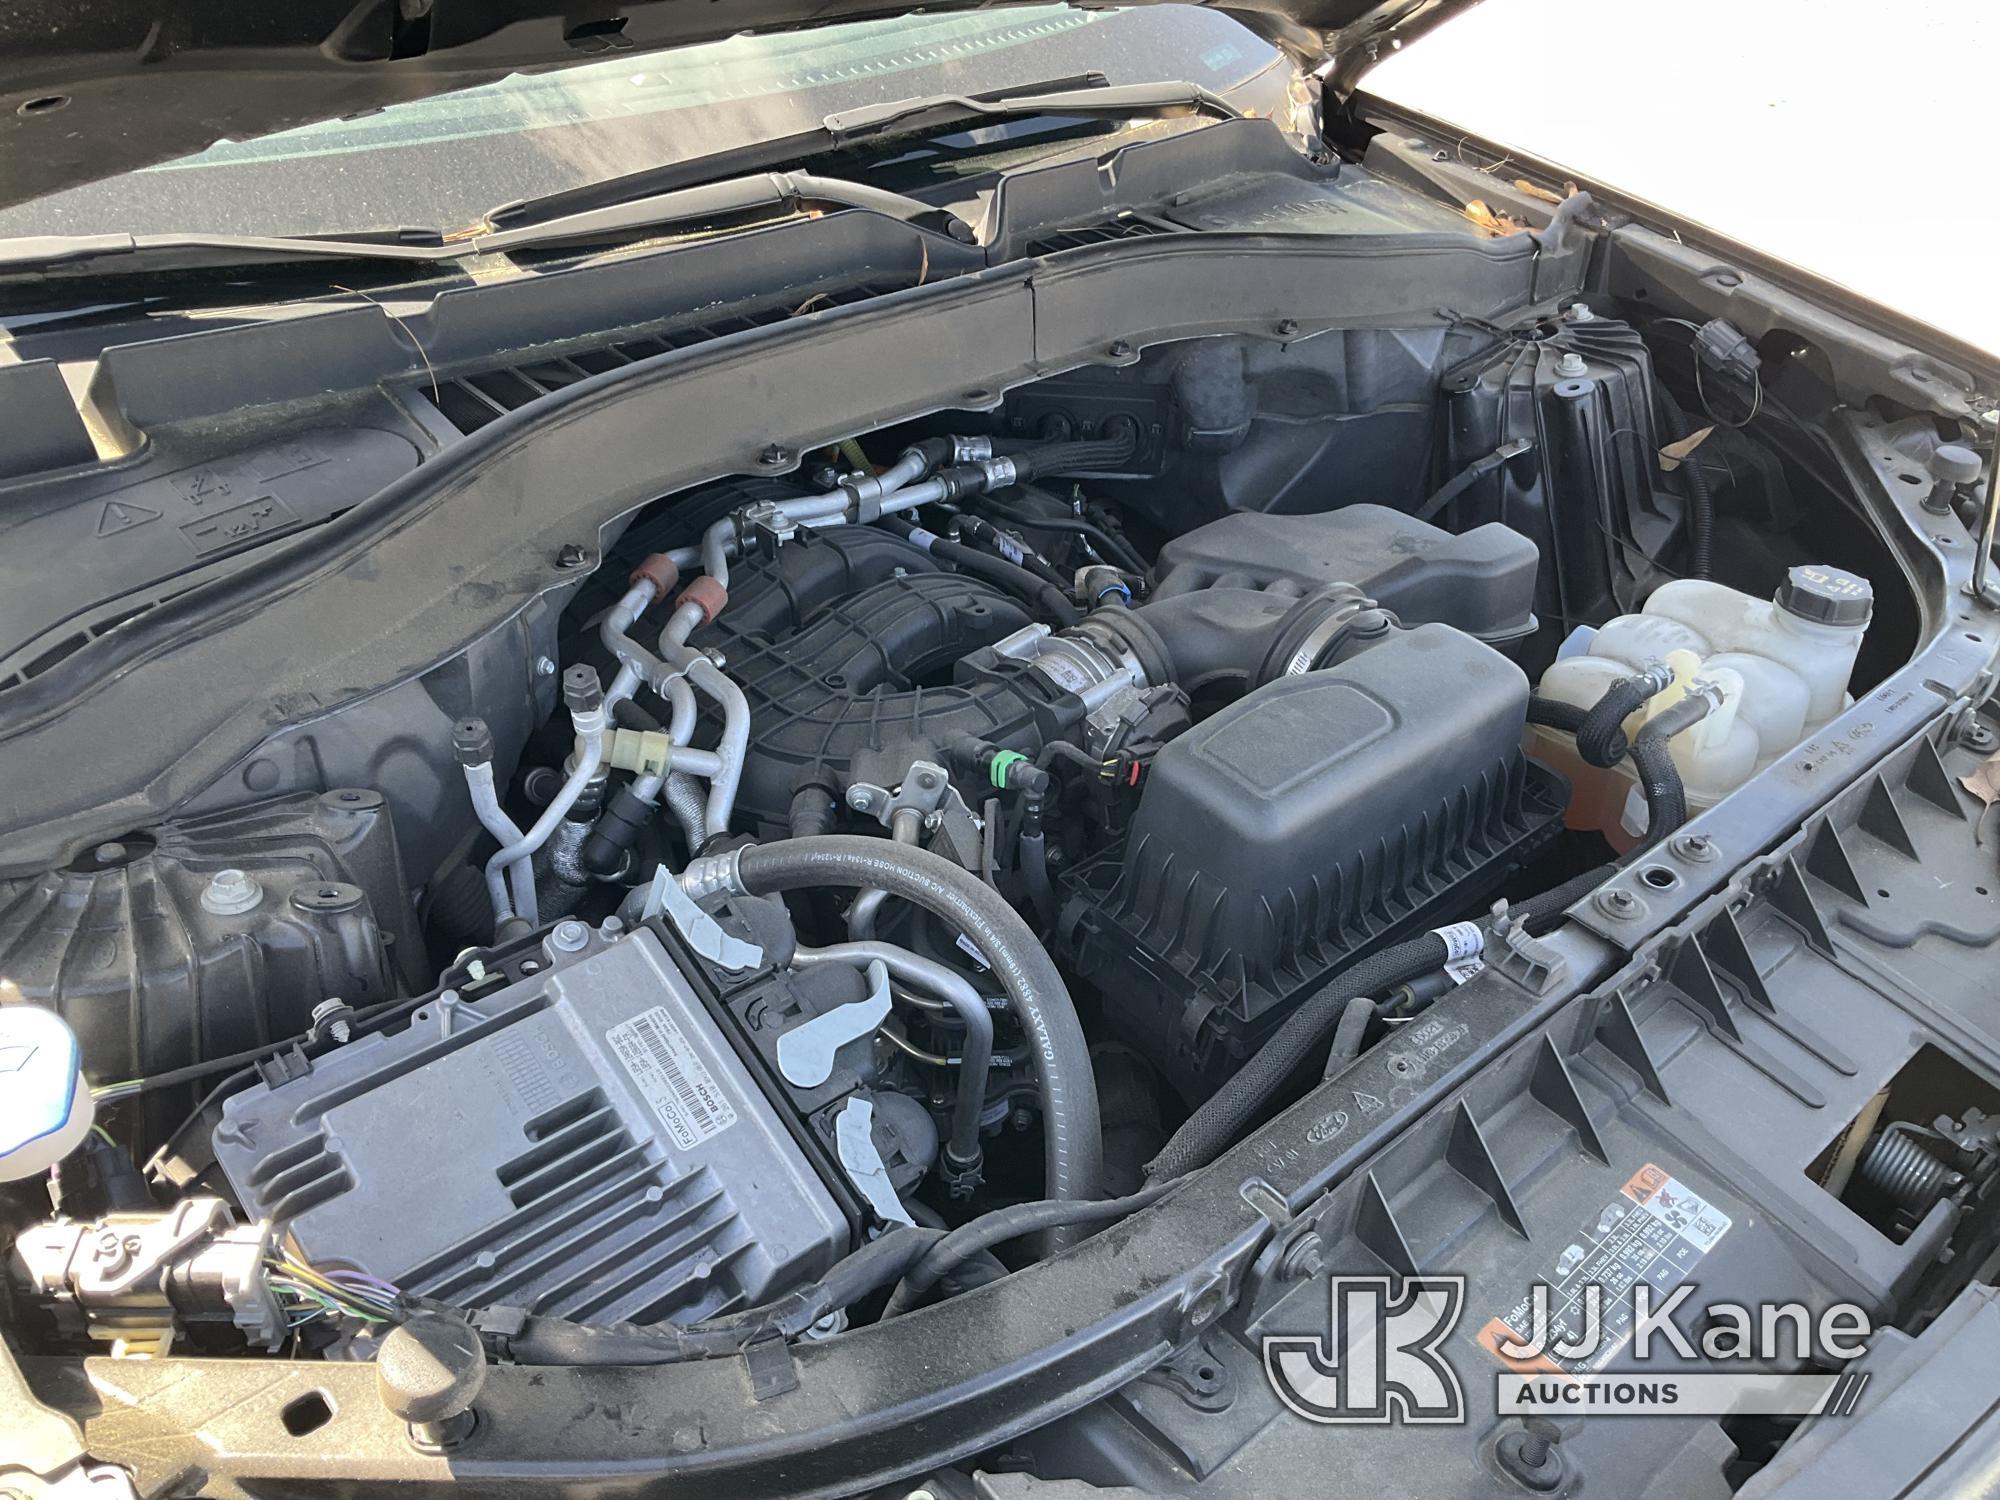 (Villa Rica, GA) 2020 Ford Explorer 4x4 4-Door Sport Utility Vehicle, (GA Power Unit) Wrecked) (Runs